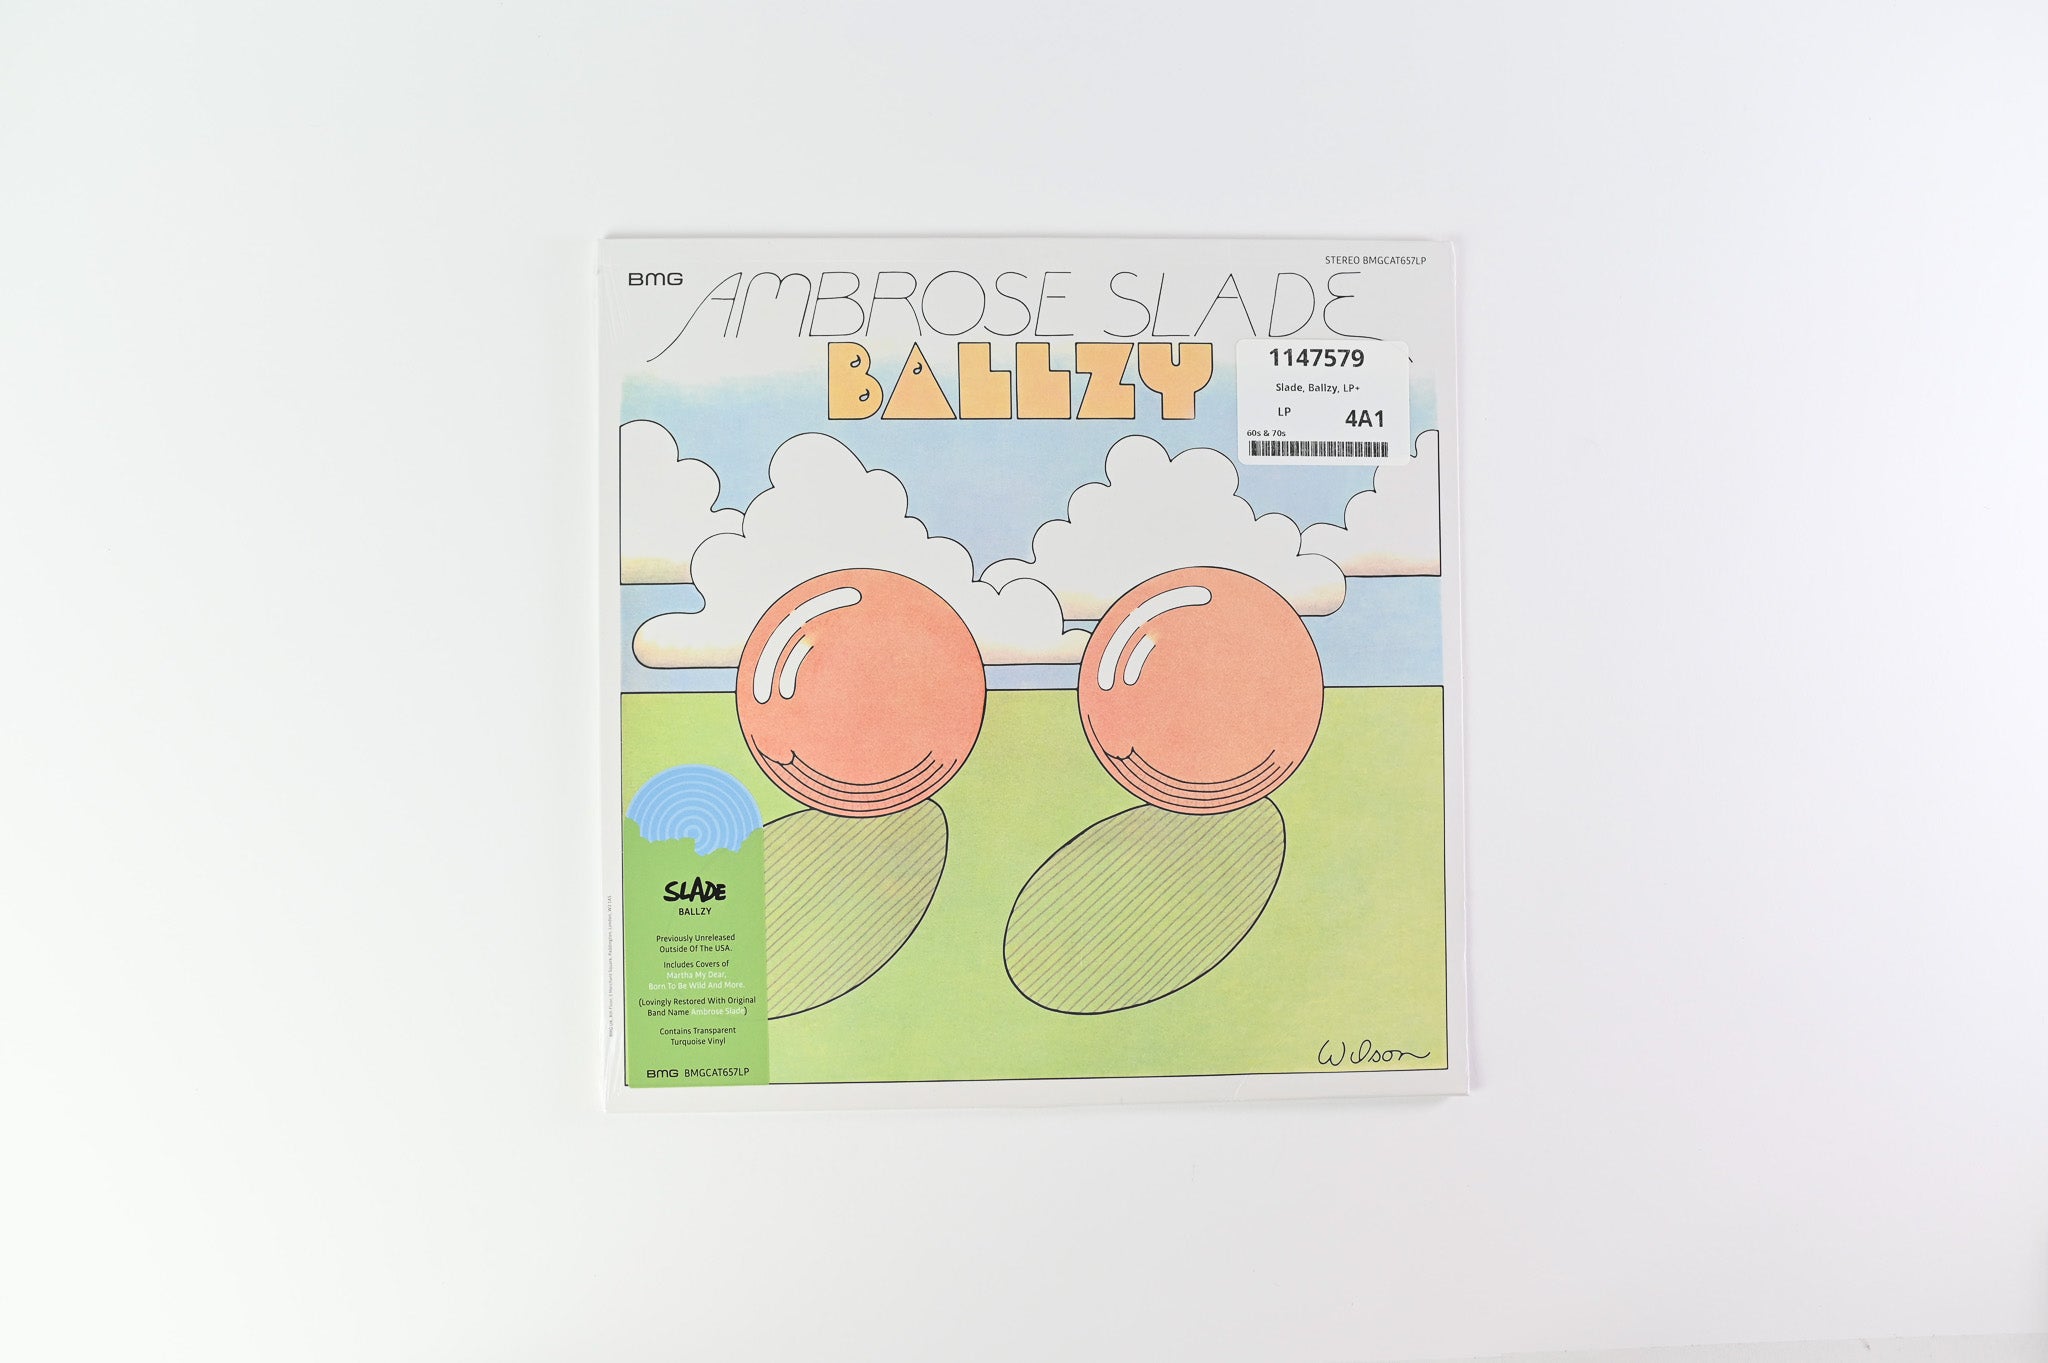 Ambrose Slade - Ballzy on BMG - Colored Vinyl Sealed